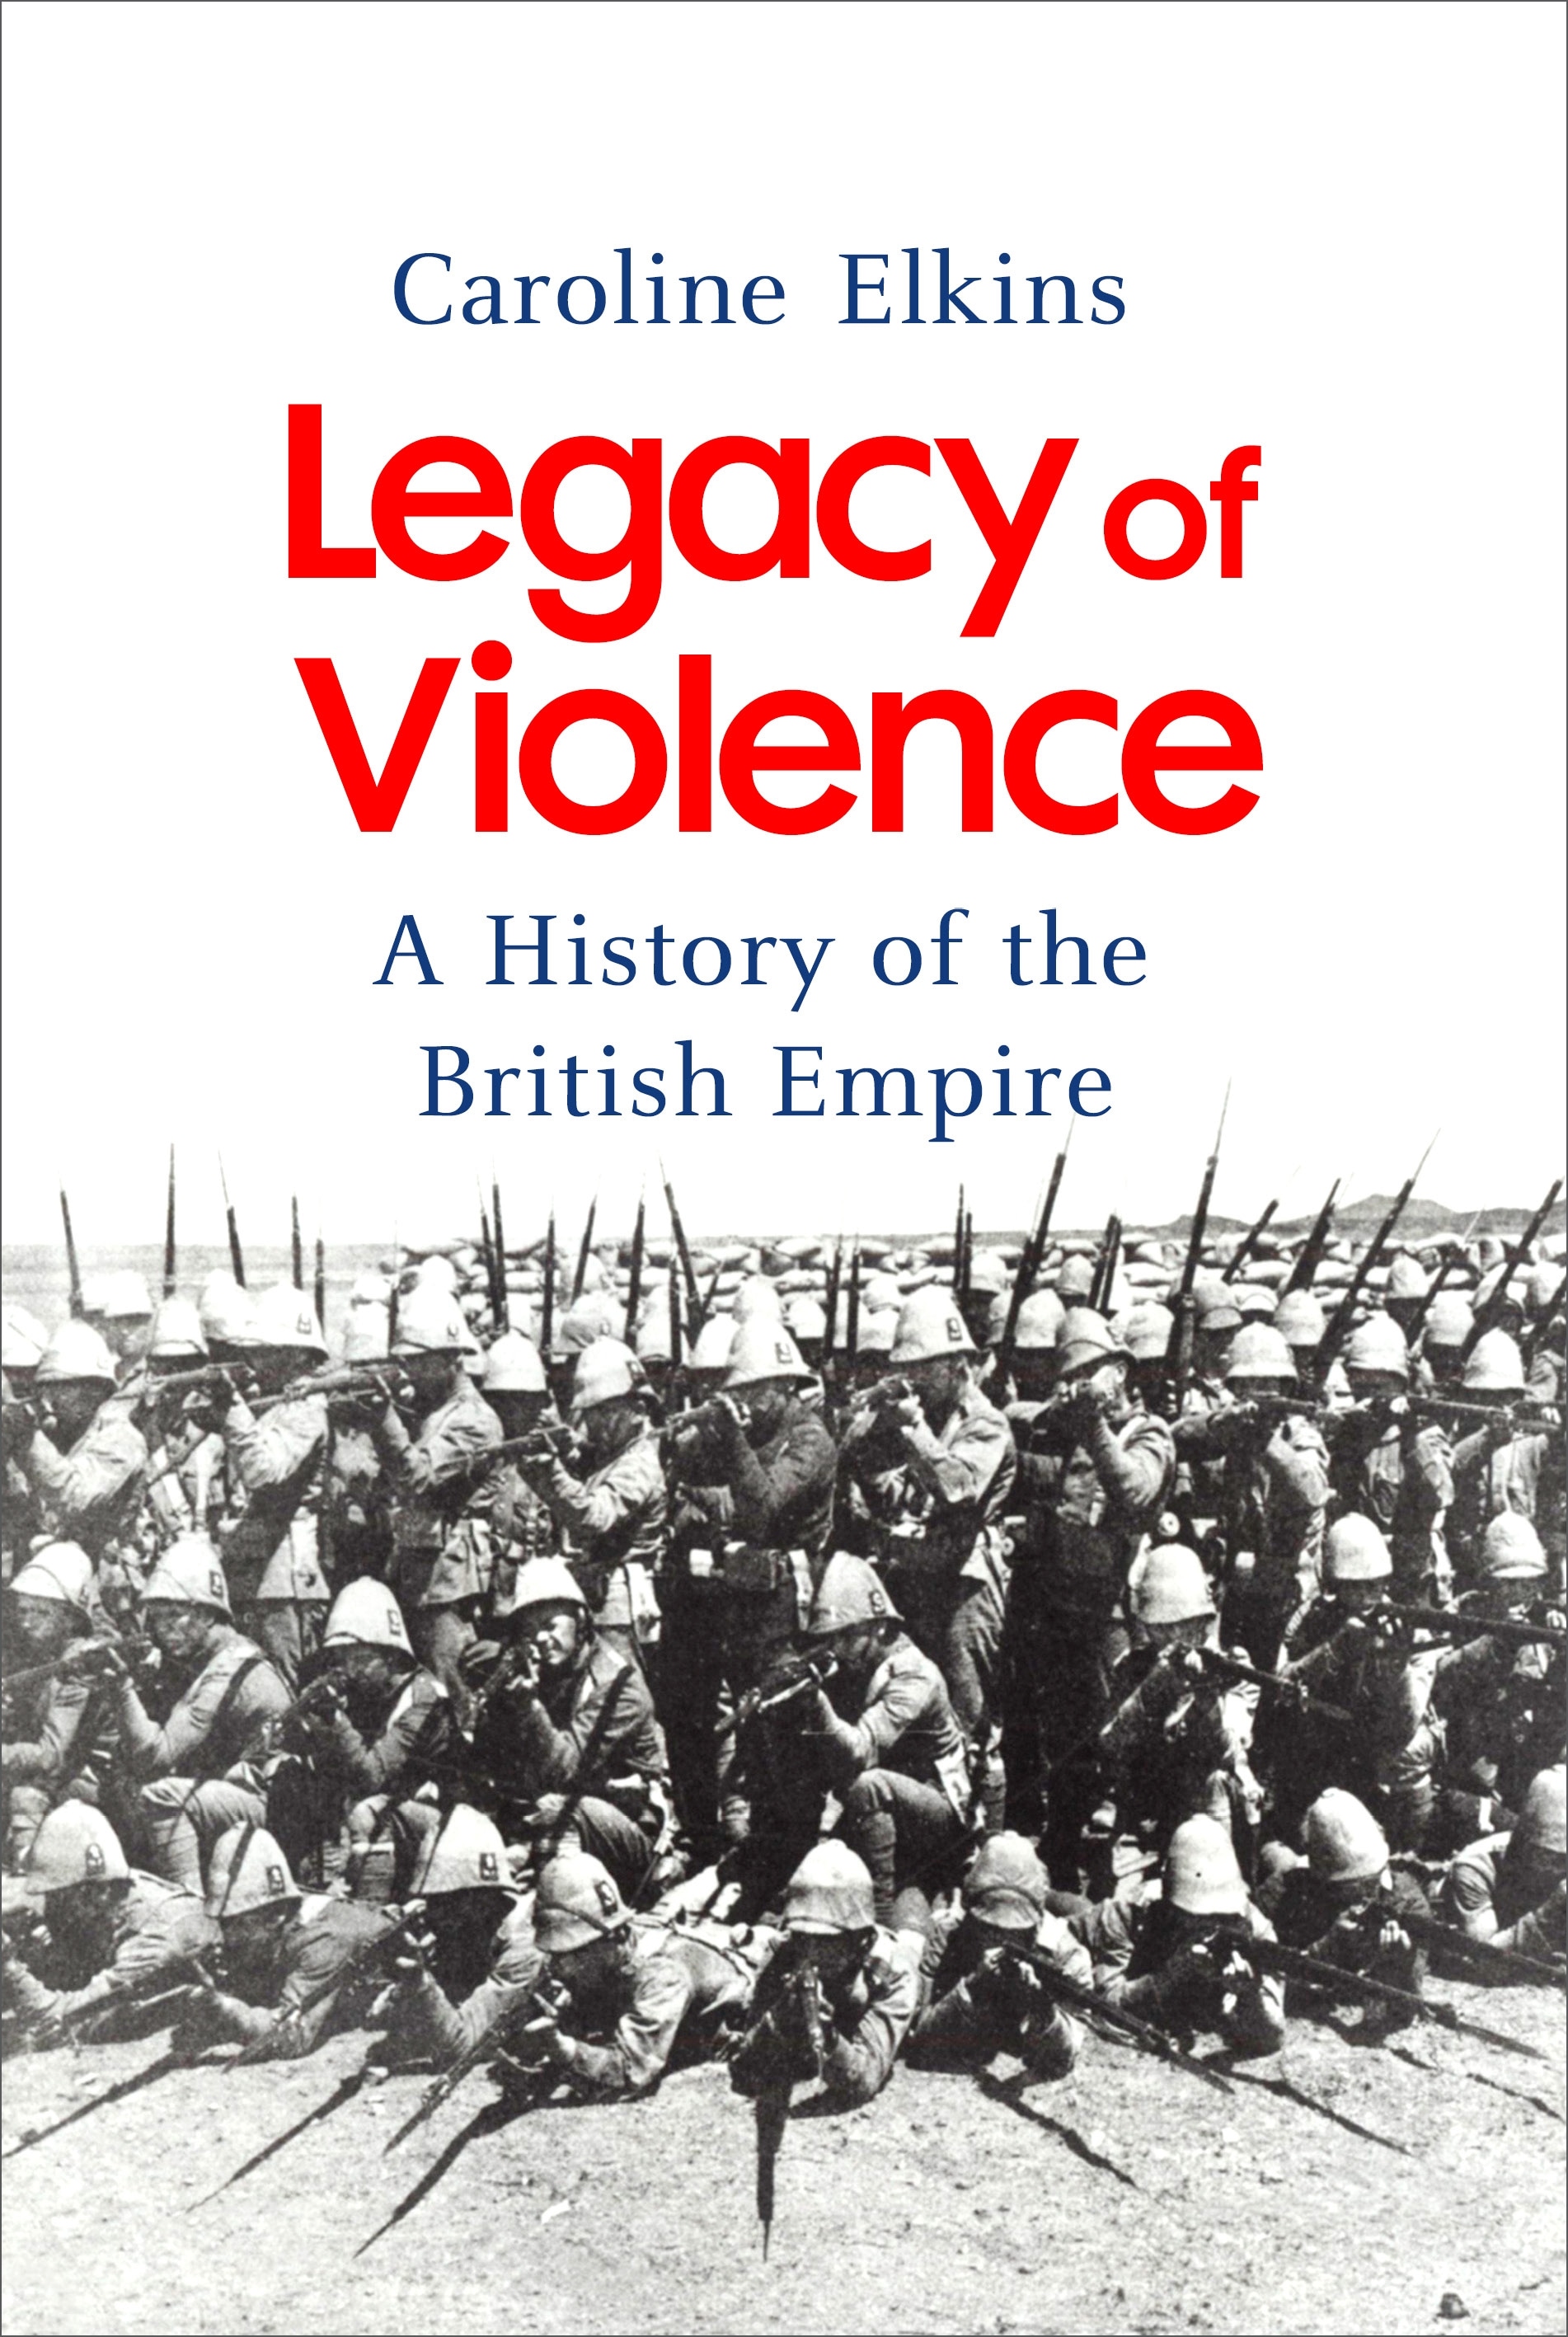 Book “Legacy of Violence” by Caroline Elkins — March 24, 2022